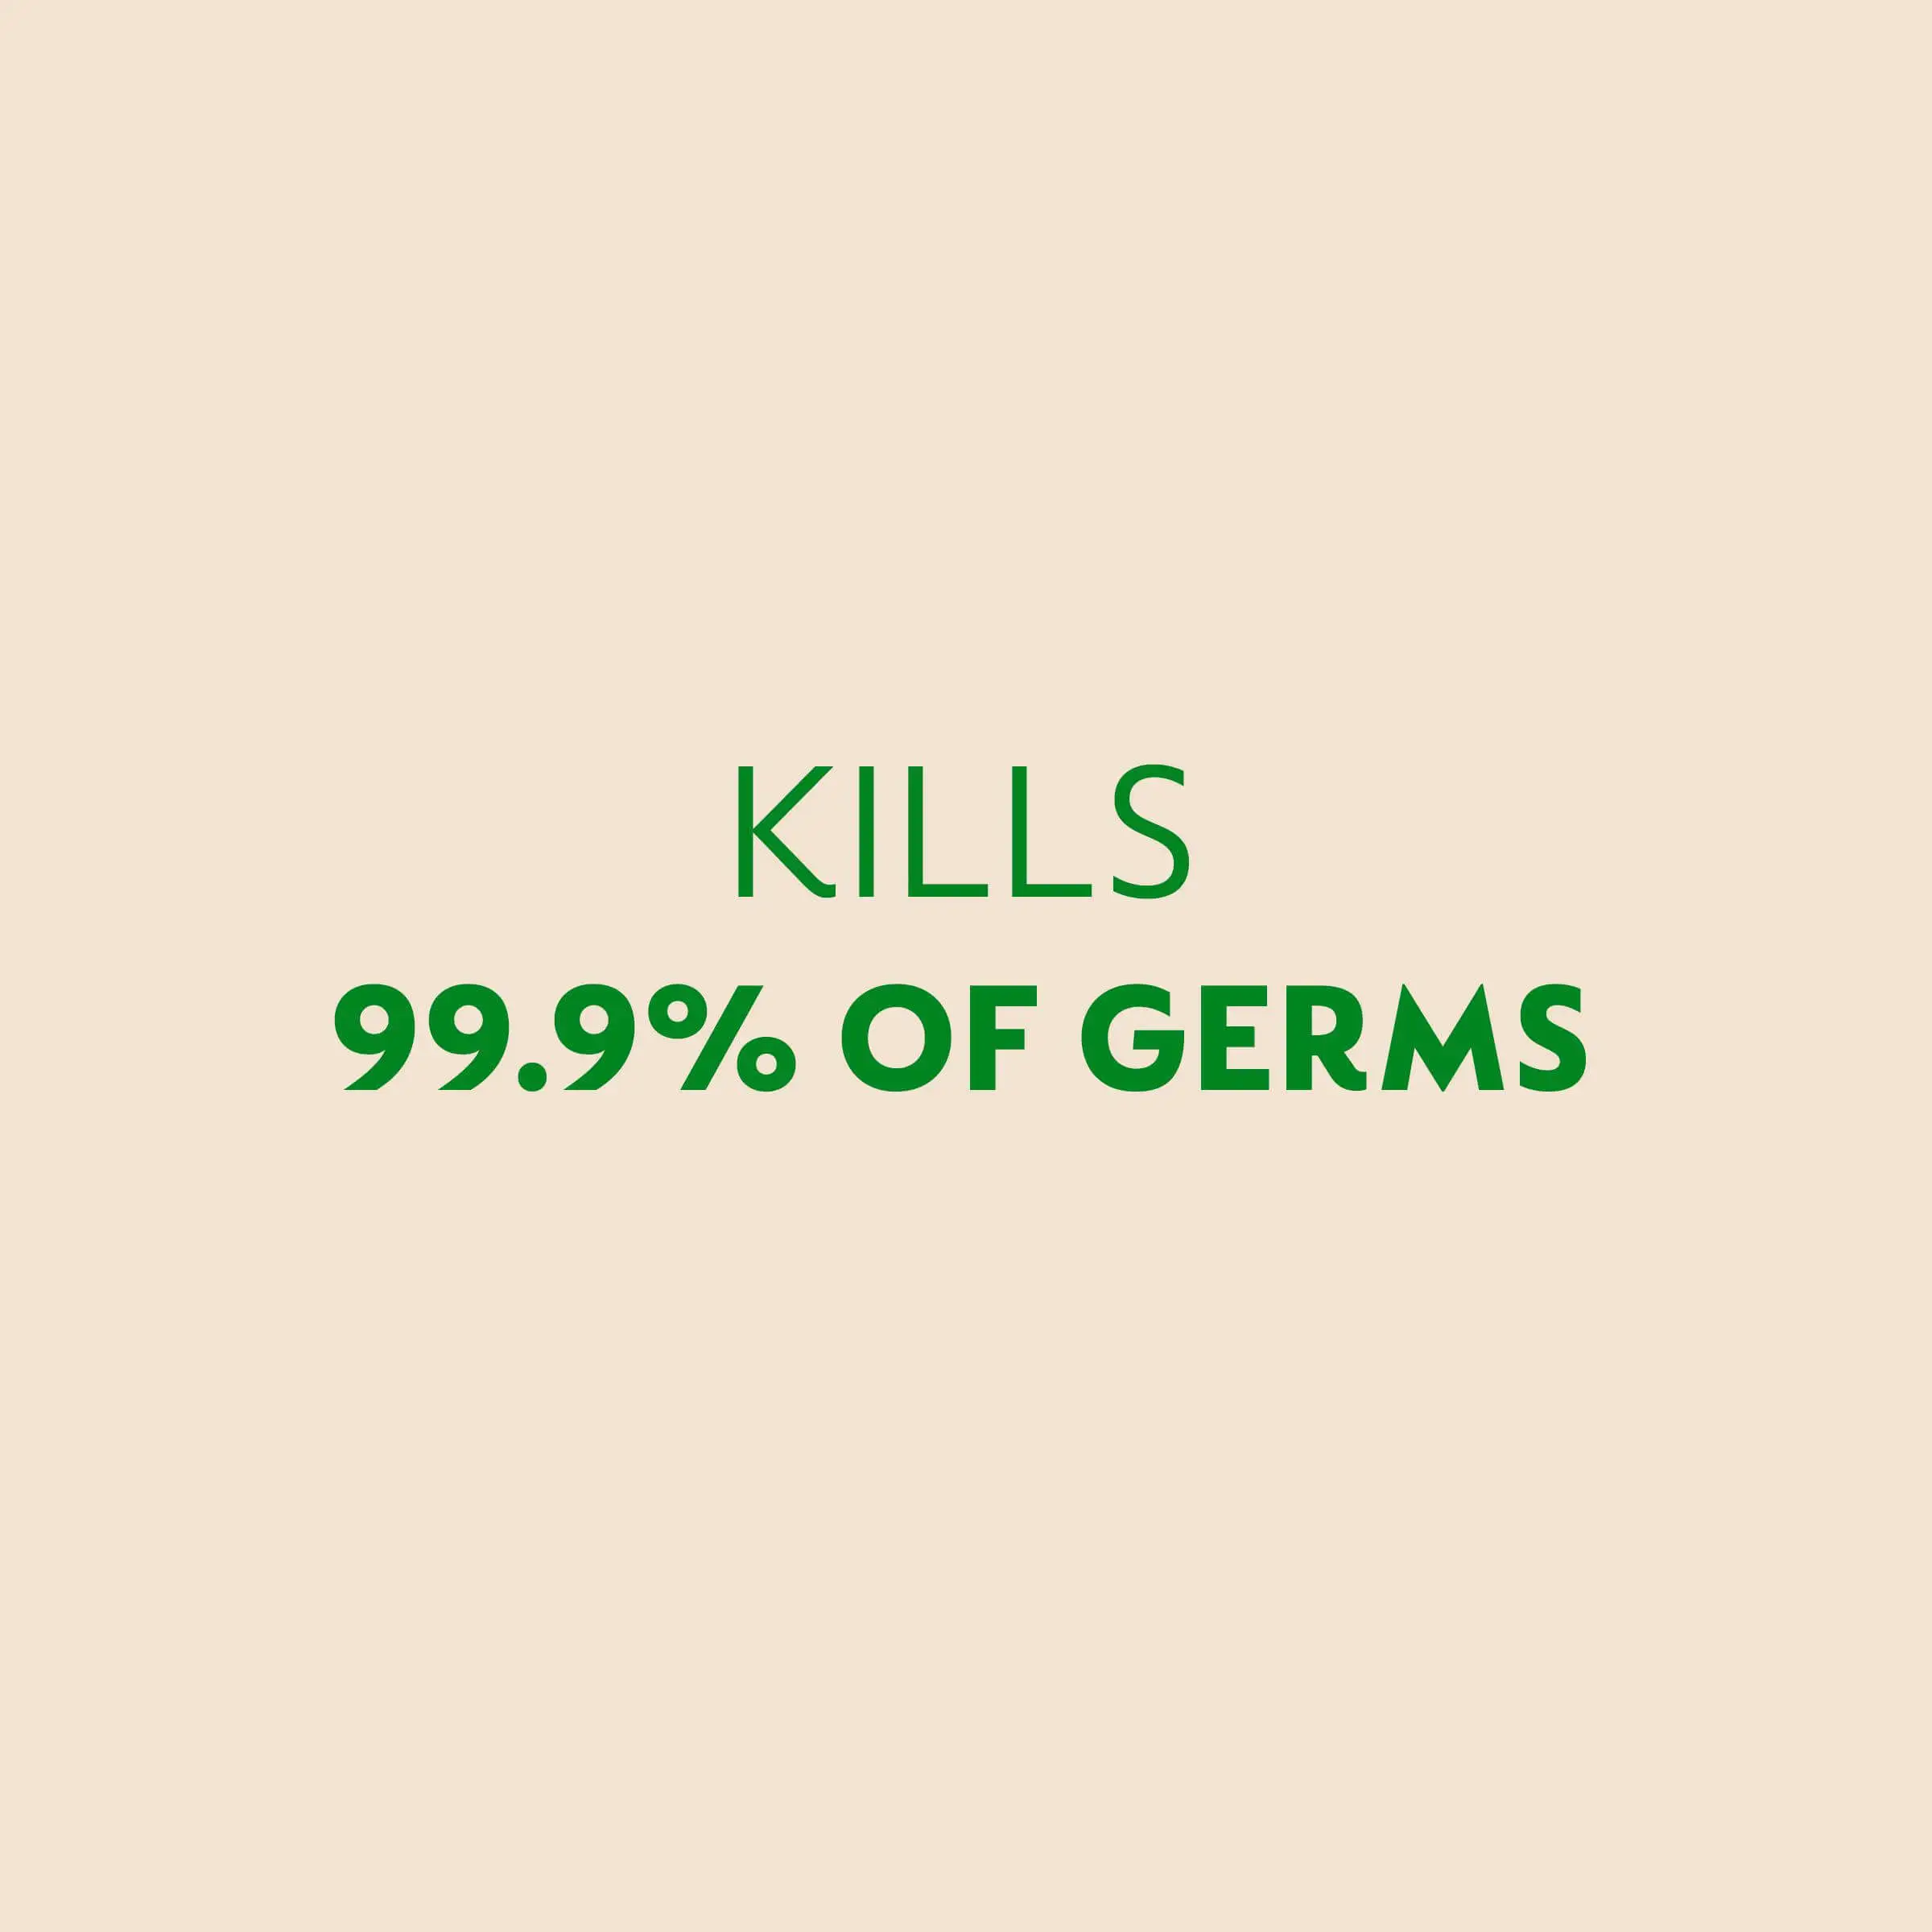 kills 9.99% of germs